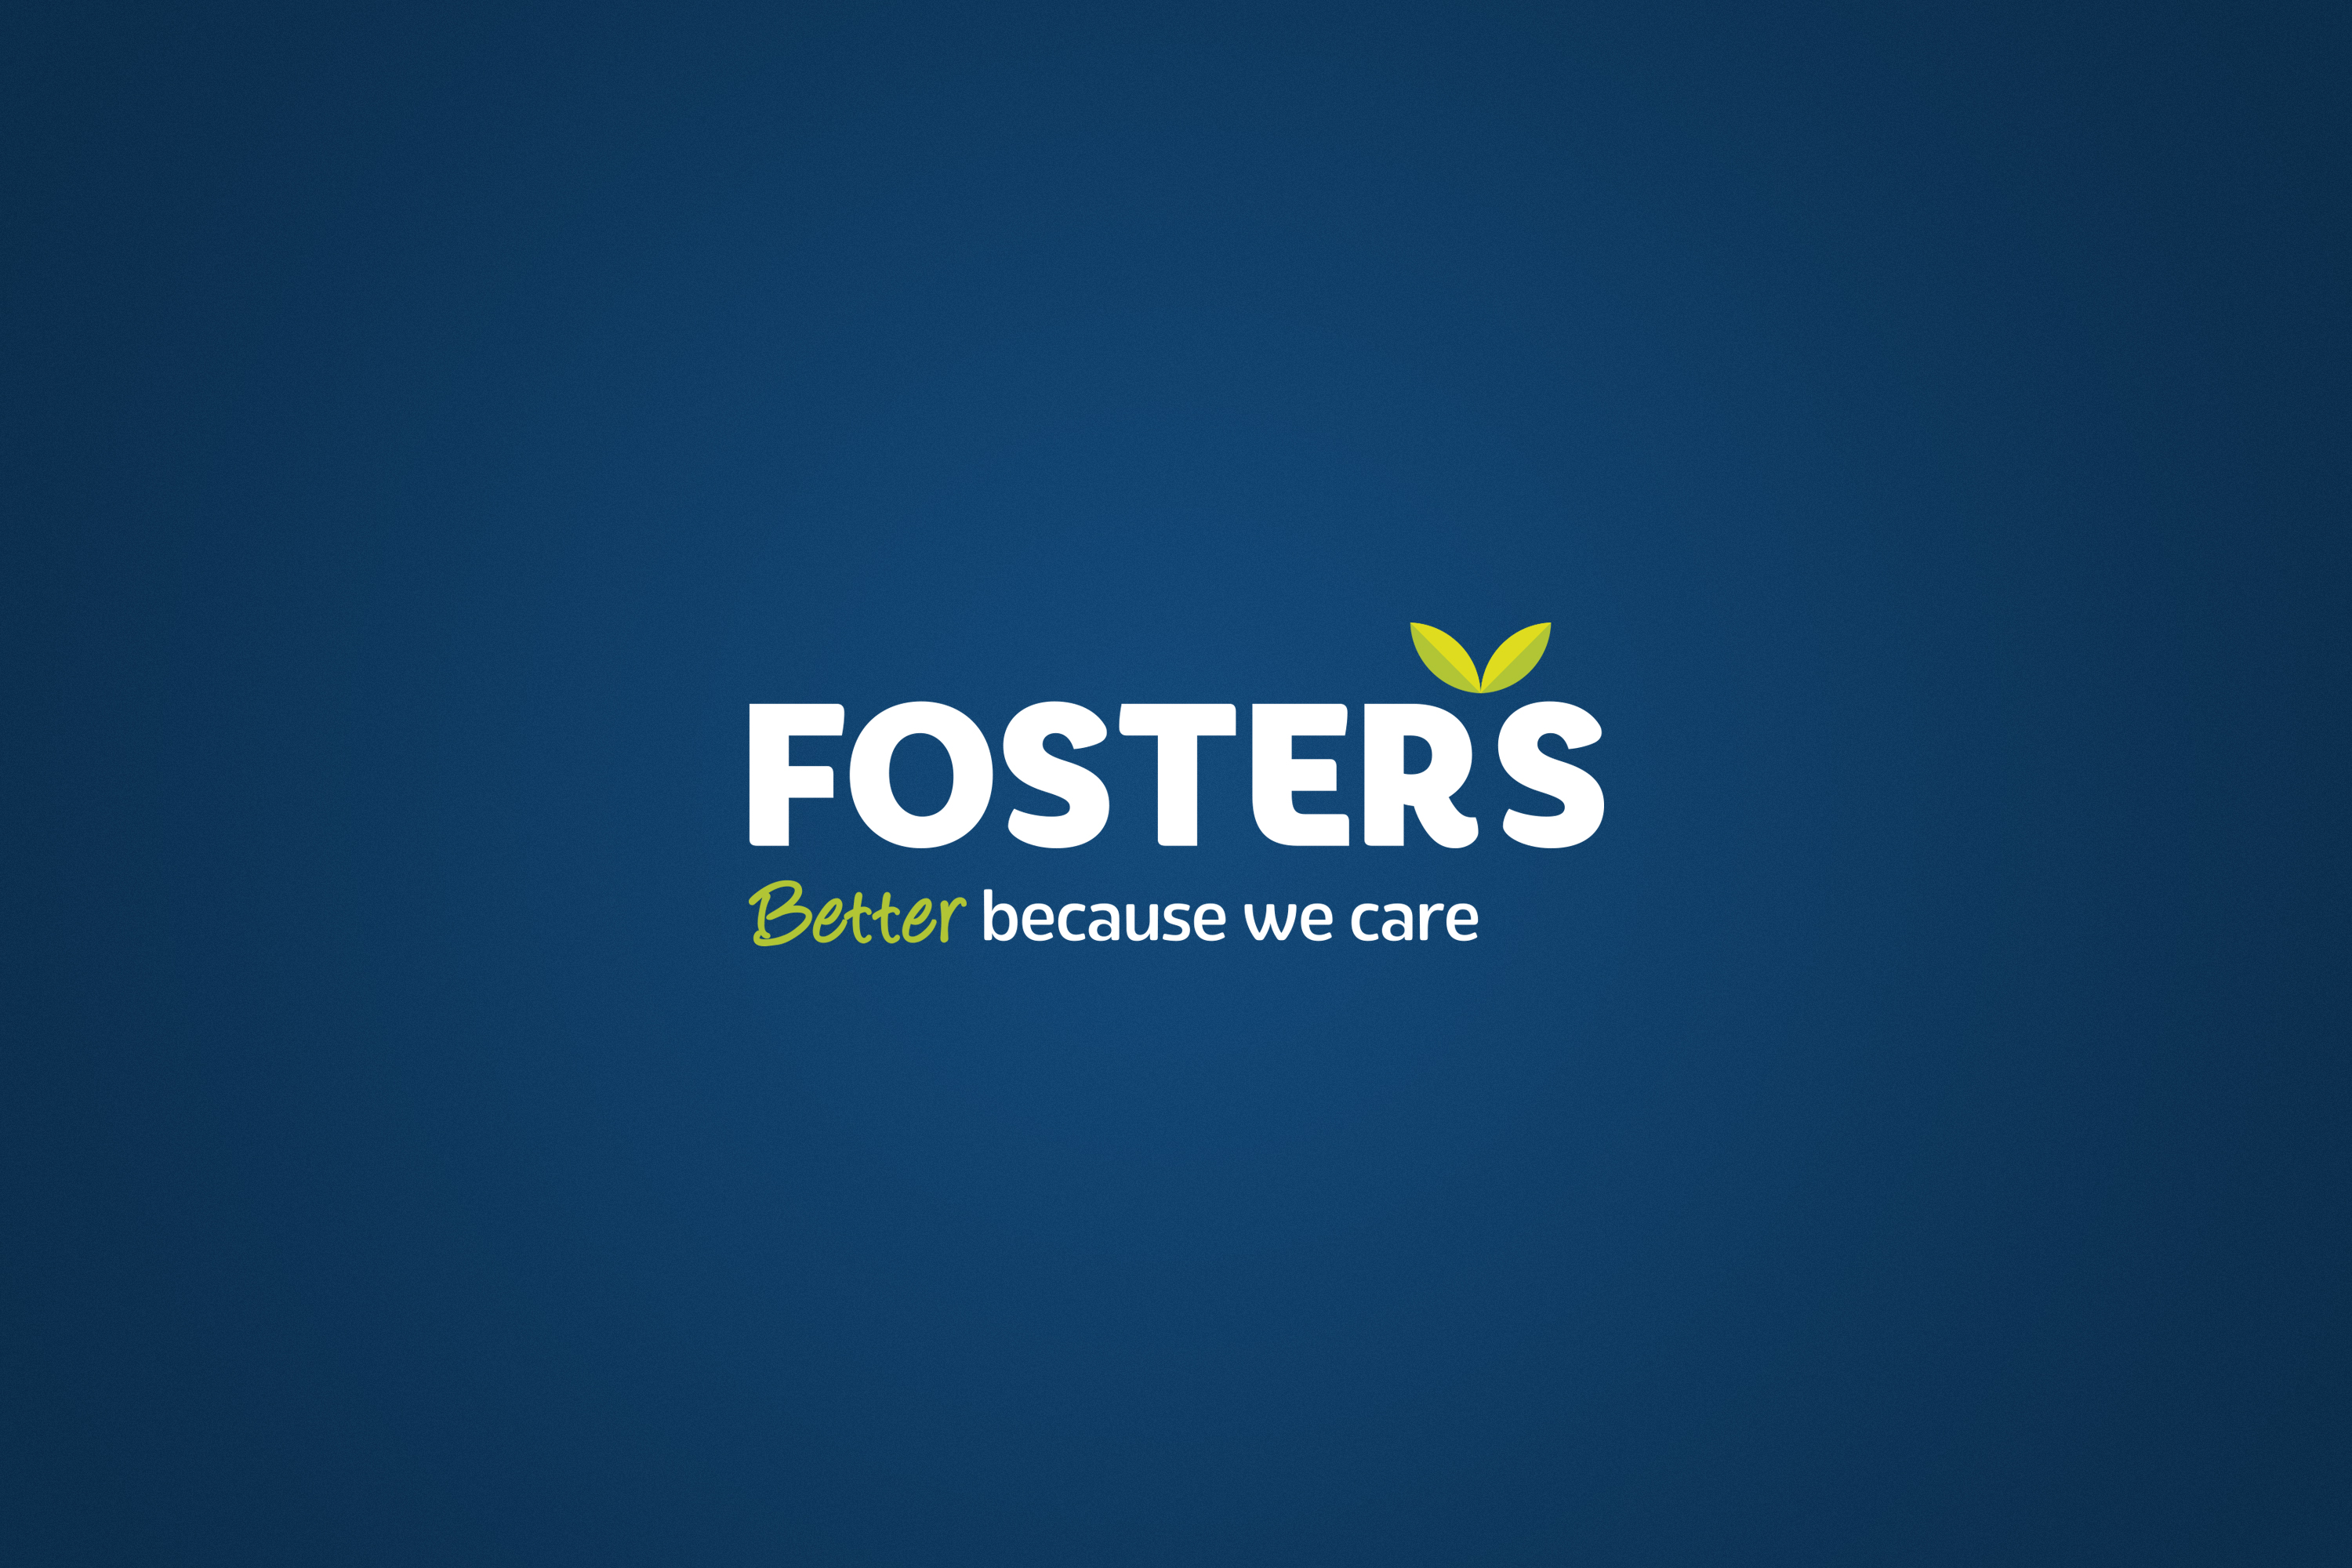 Foster's Brand Identity